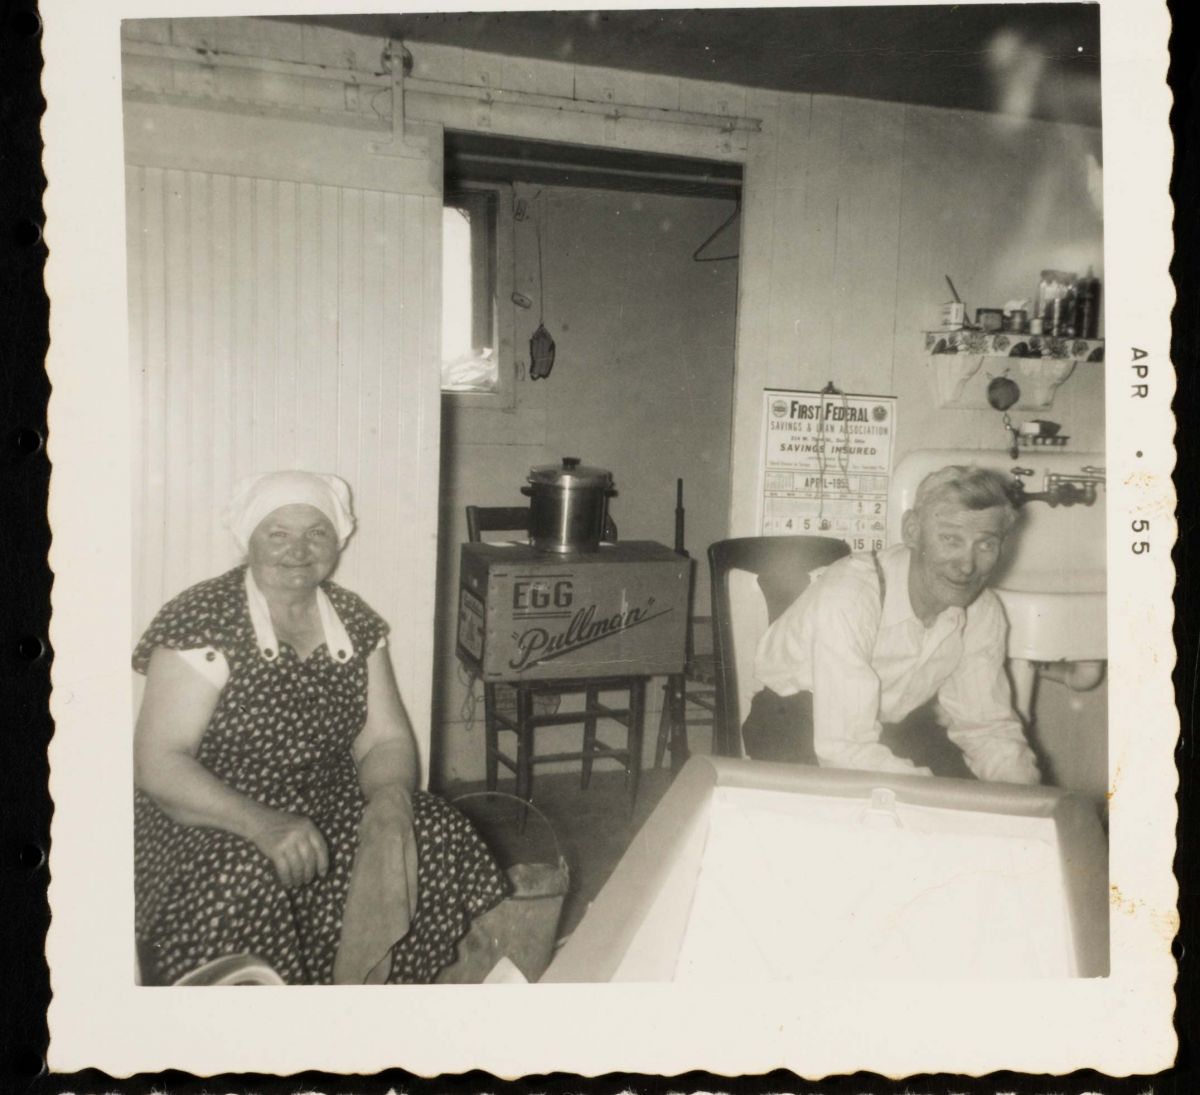 celuch-josef-1955-anna-bakersville-farm-house-basemet-kitchen.jpg